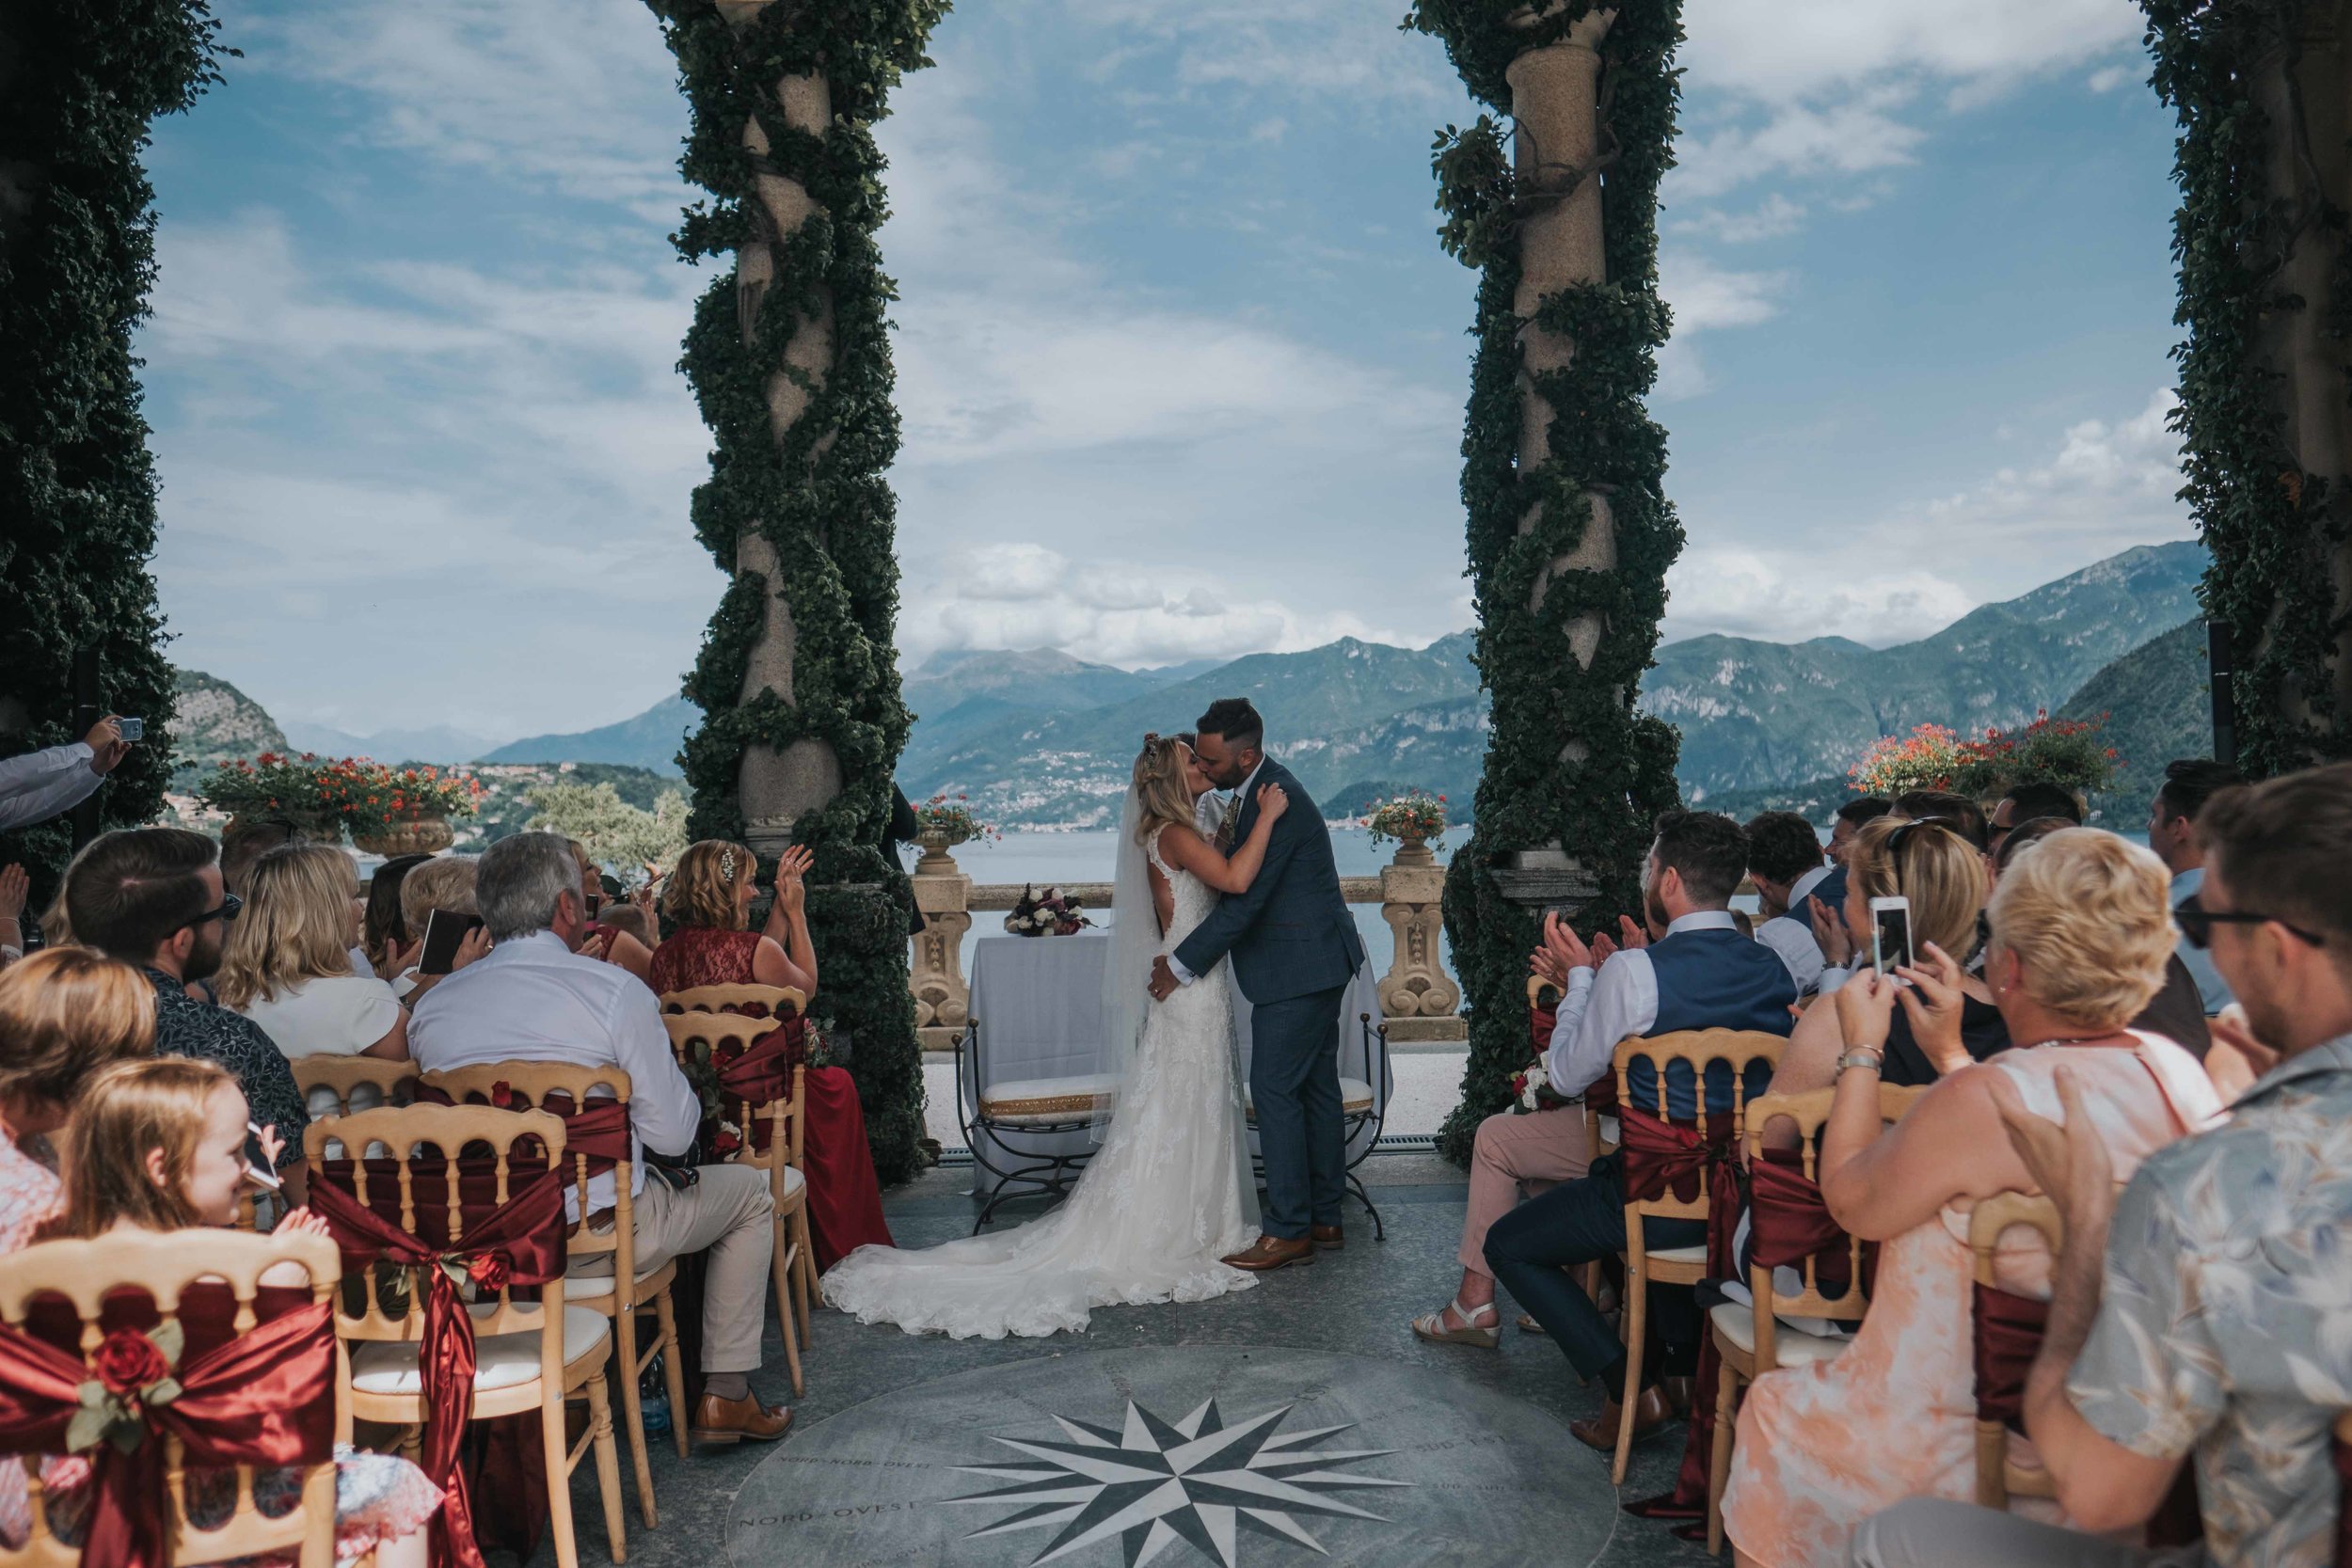 Laco Como Italy destination wedding photographer cheshire north west england documentry photography (56 of 117).jpg